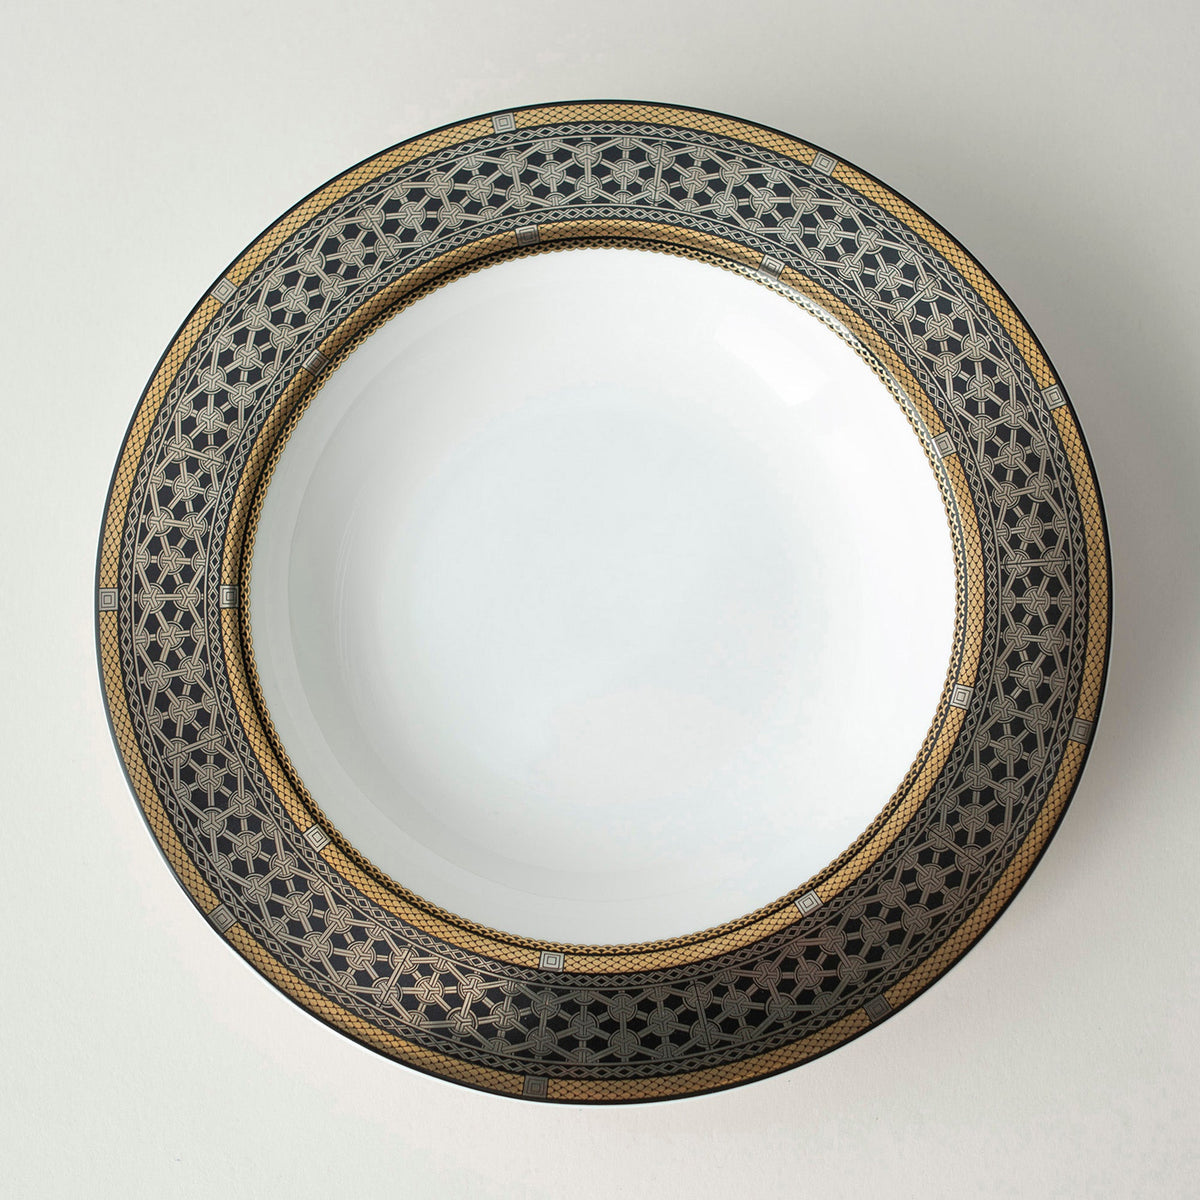 A Caskata Artisanal Home Hawthorne Onyx Gold &amp; Platinum Rimmed Soup Bowl on a sleek white surface.